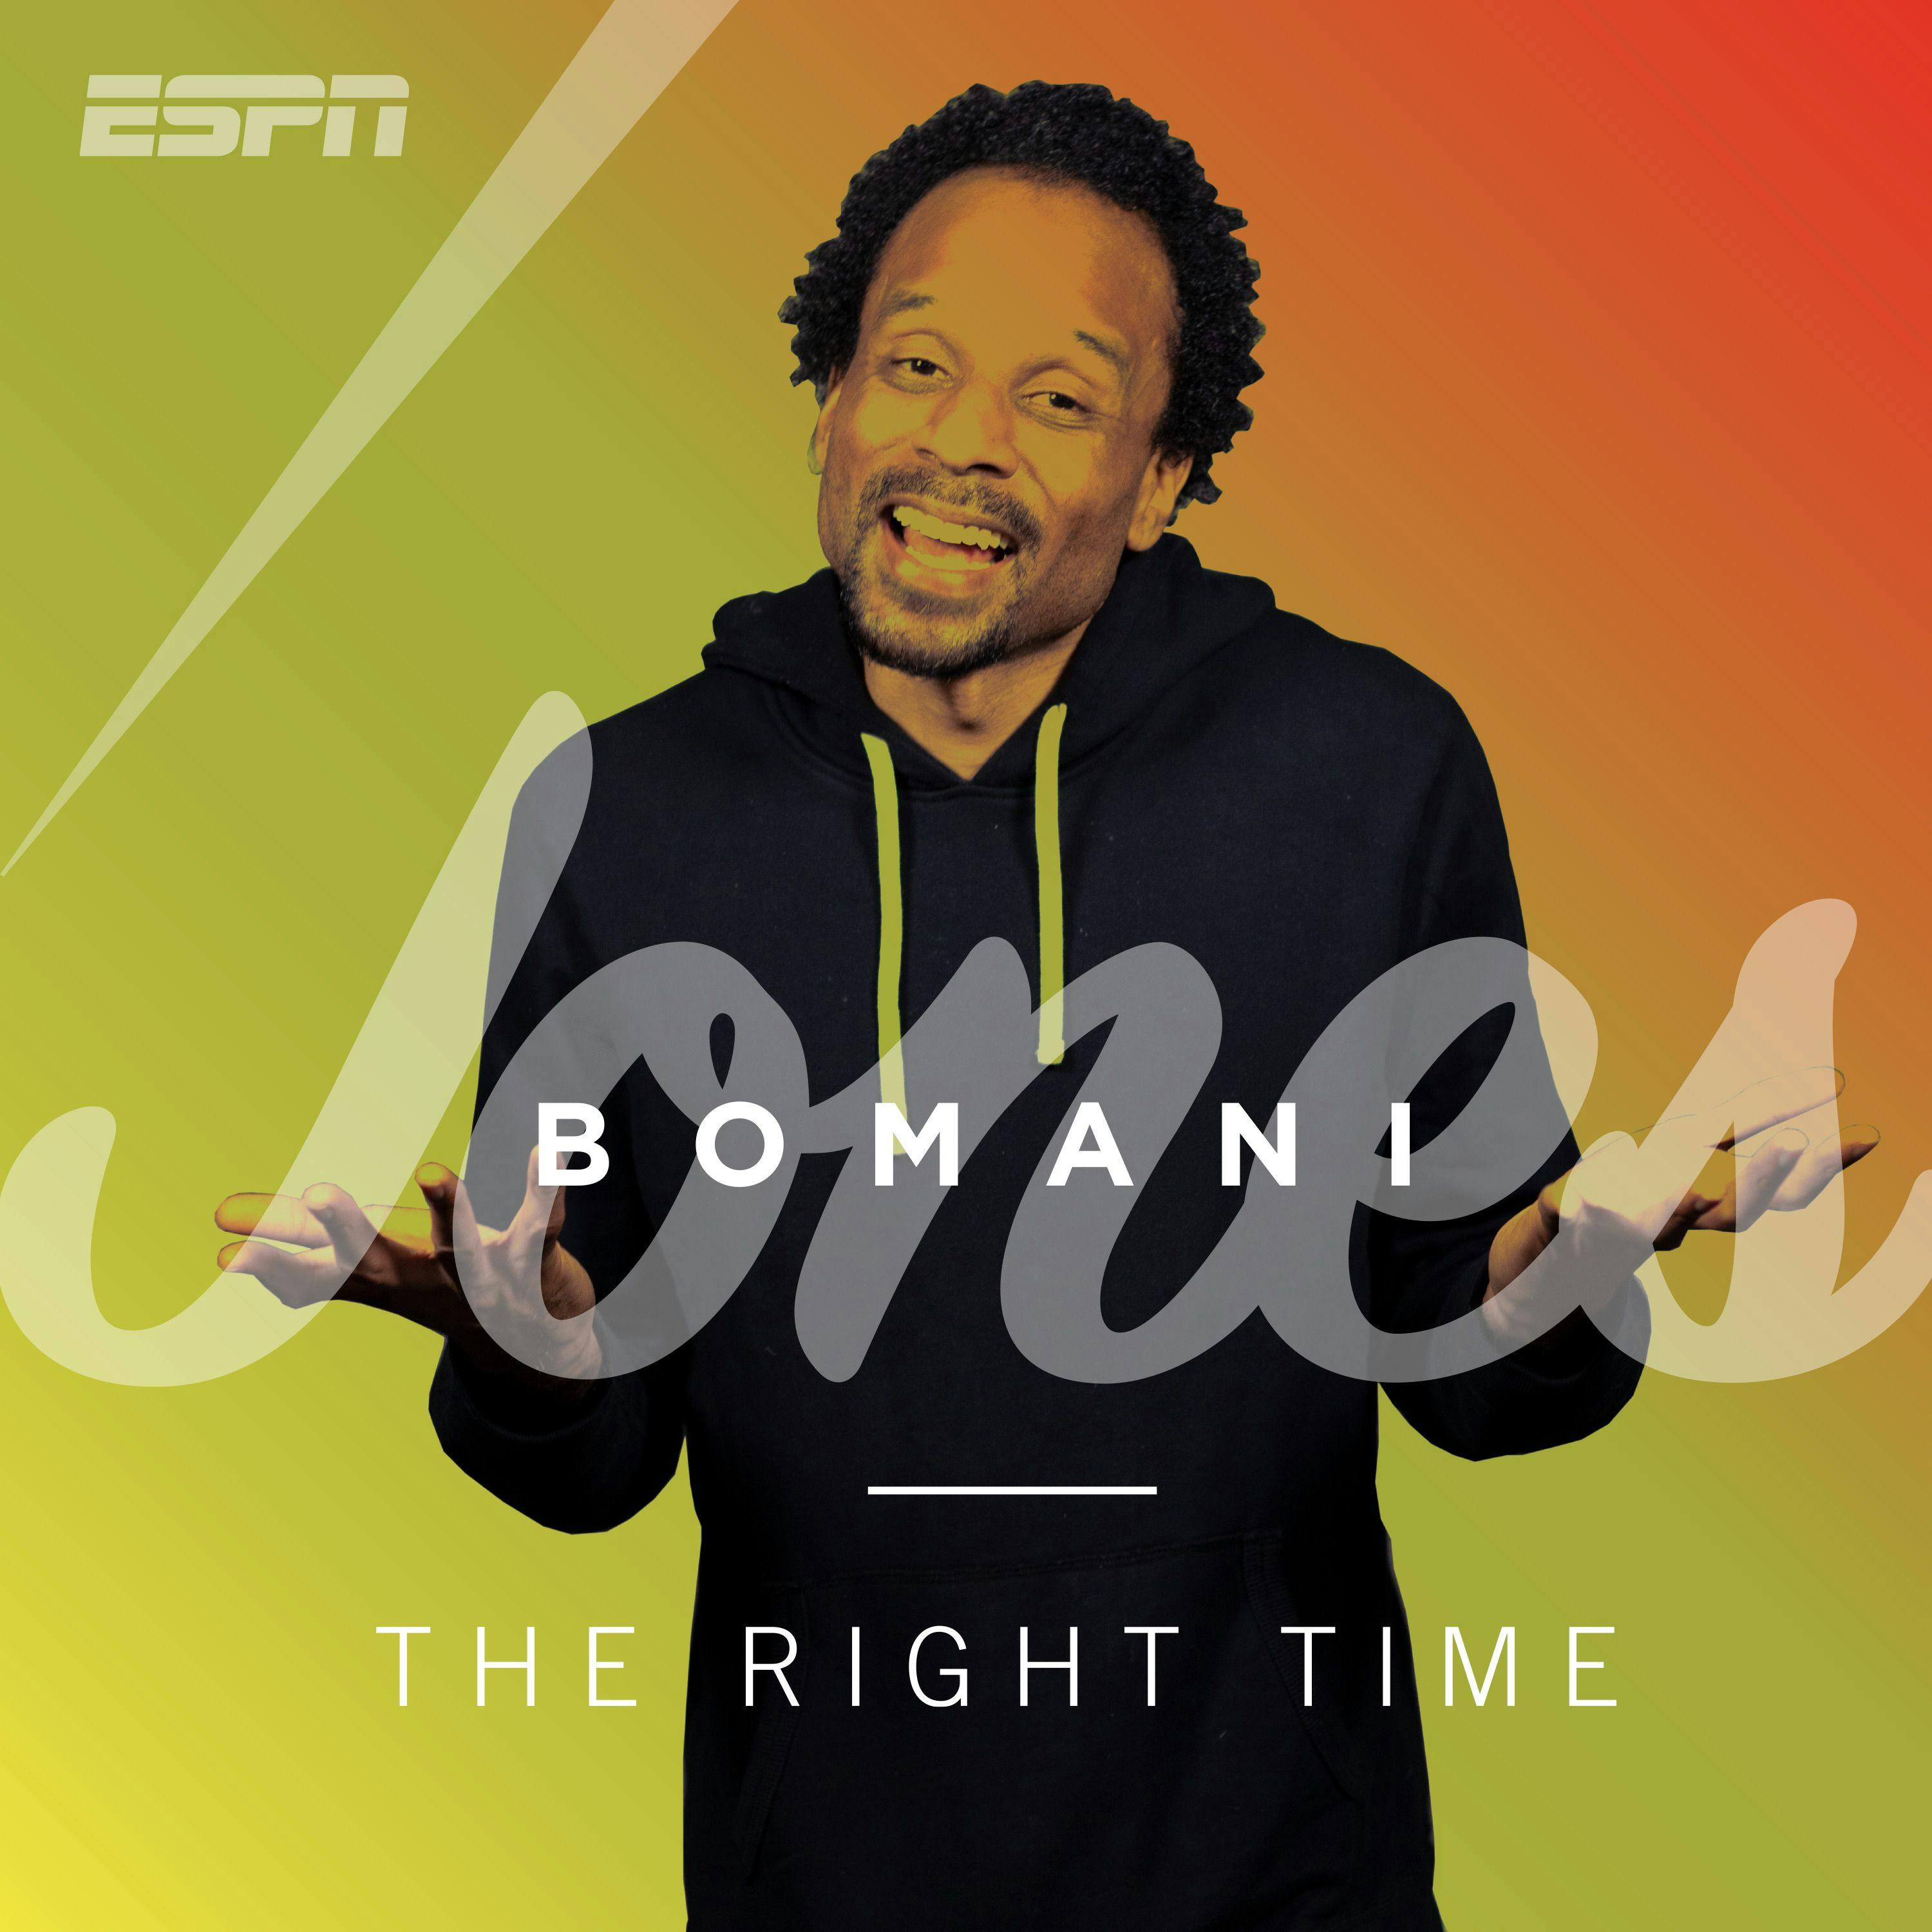 Samuel Rihanna - The Right Time with Bomani Jones Show - PodCenter - ESPN Radio